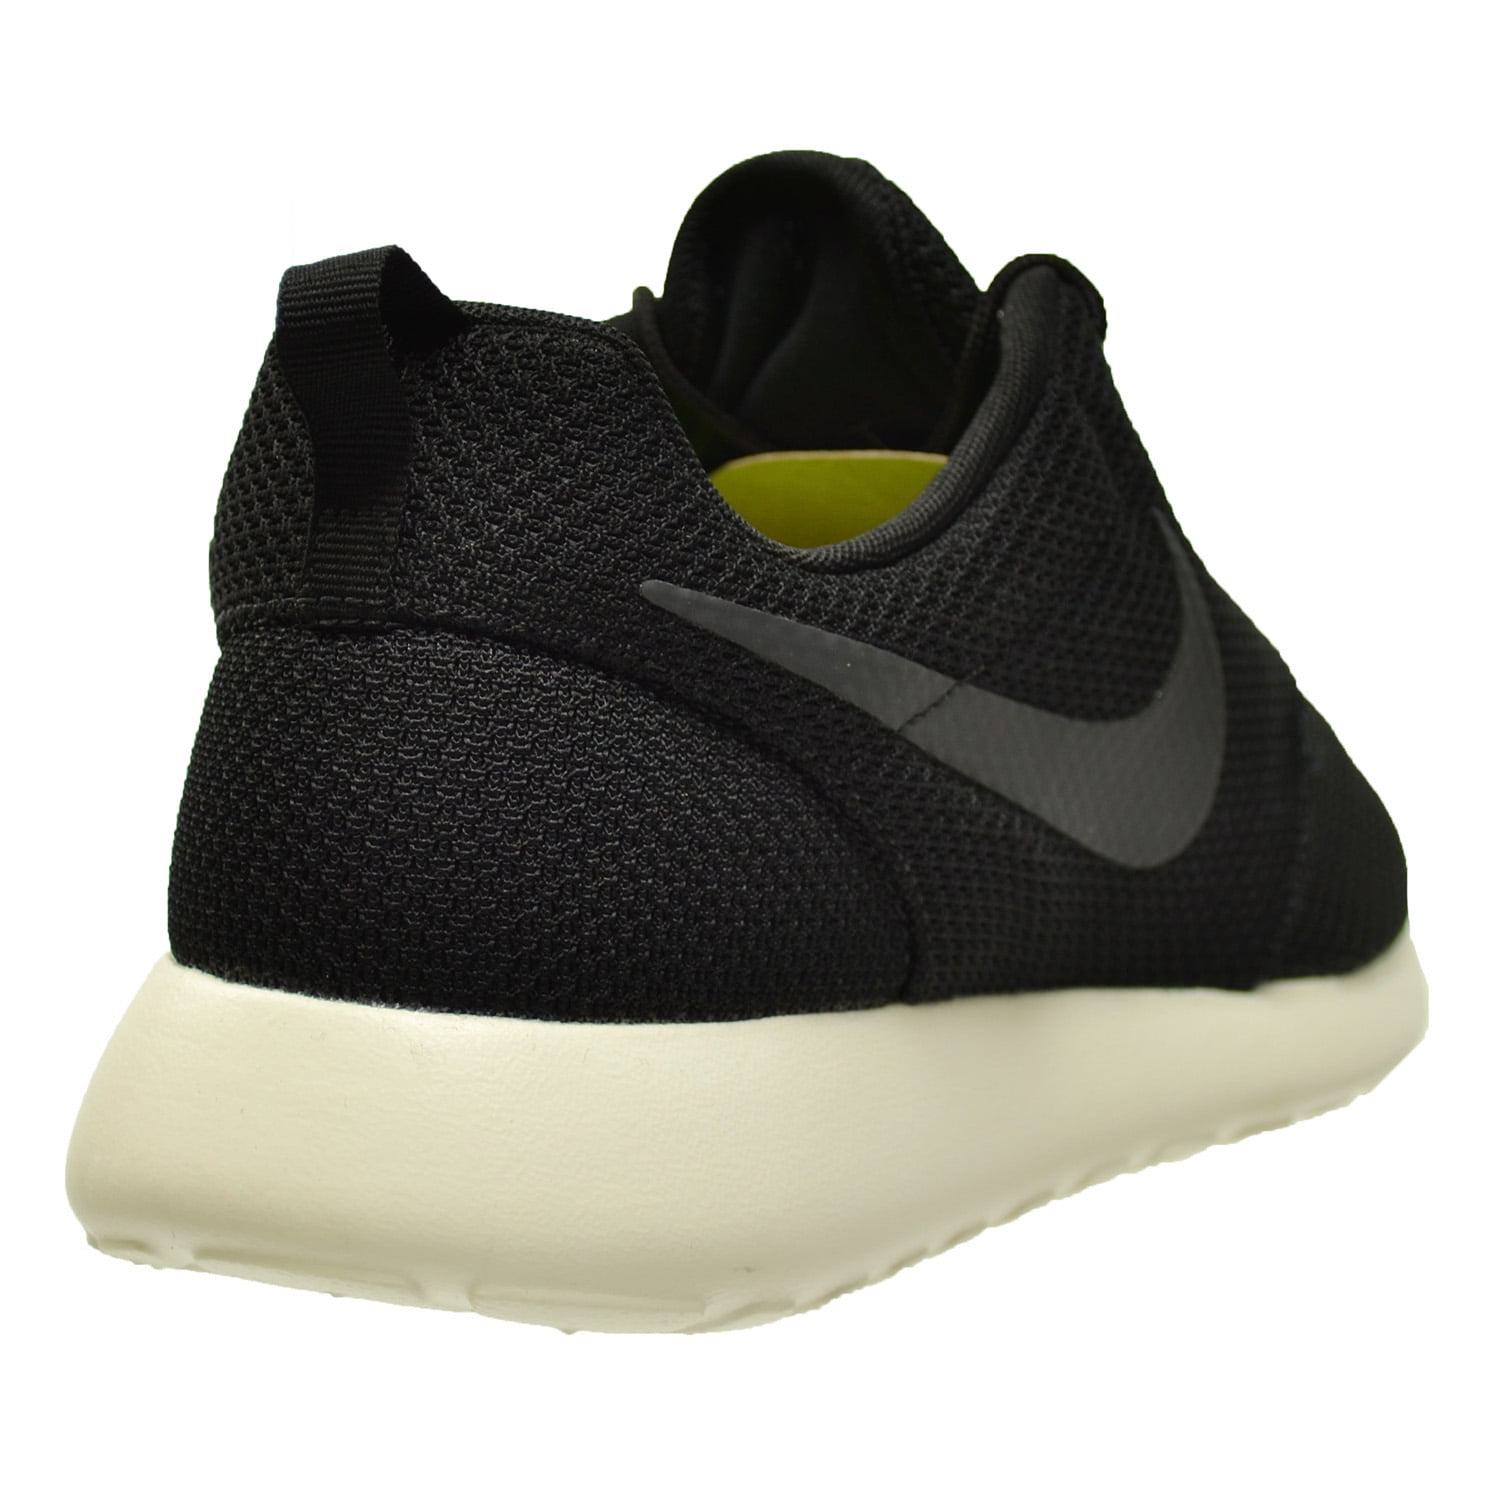 Nike Roshe Run One Men's Shoes Black/Anthracite-Sail 511881-010 -  Walmart.com